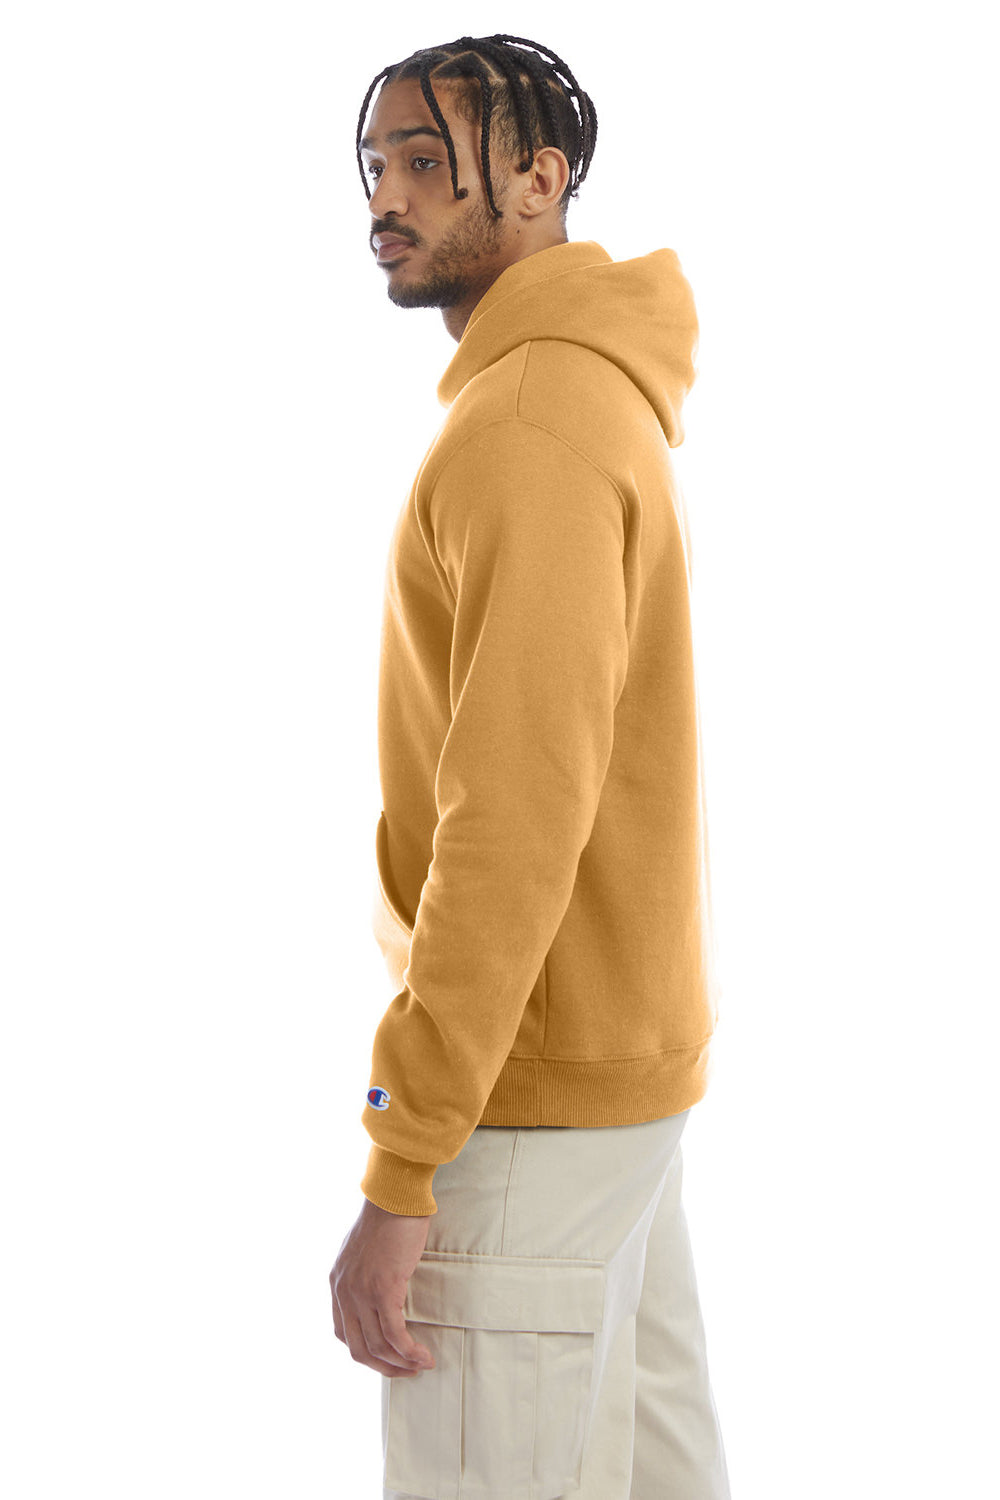 Champion S700 Mens Double Dry Eco Moisture Wicking Fleece Hooded Sweatshirt Hoodie Gold Glint SIde